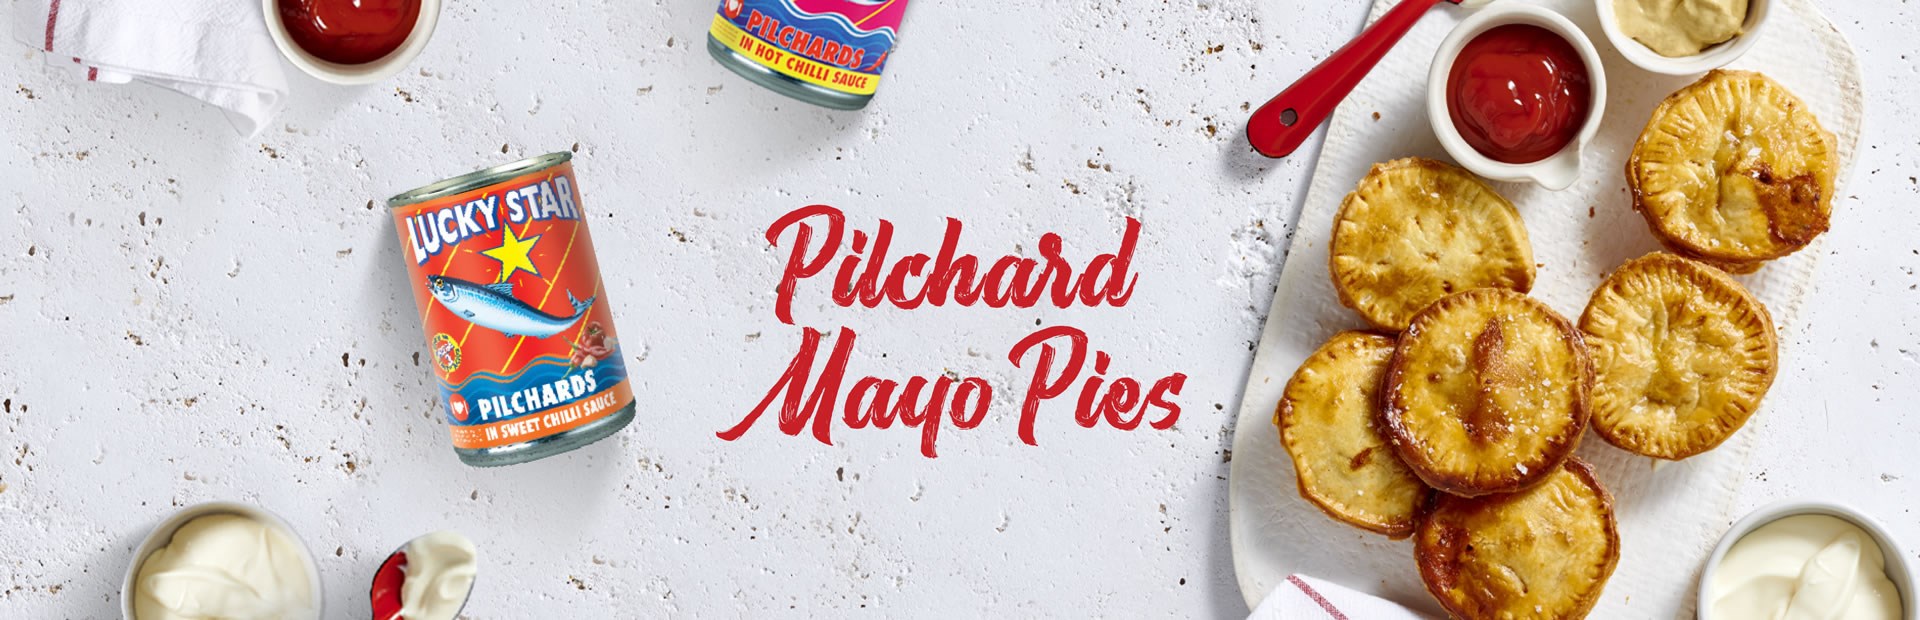 Pilchard Mayo Pies